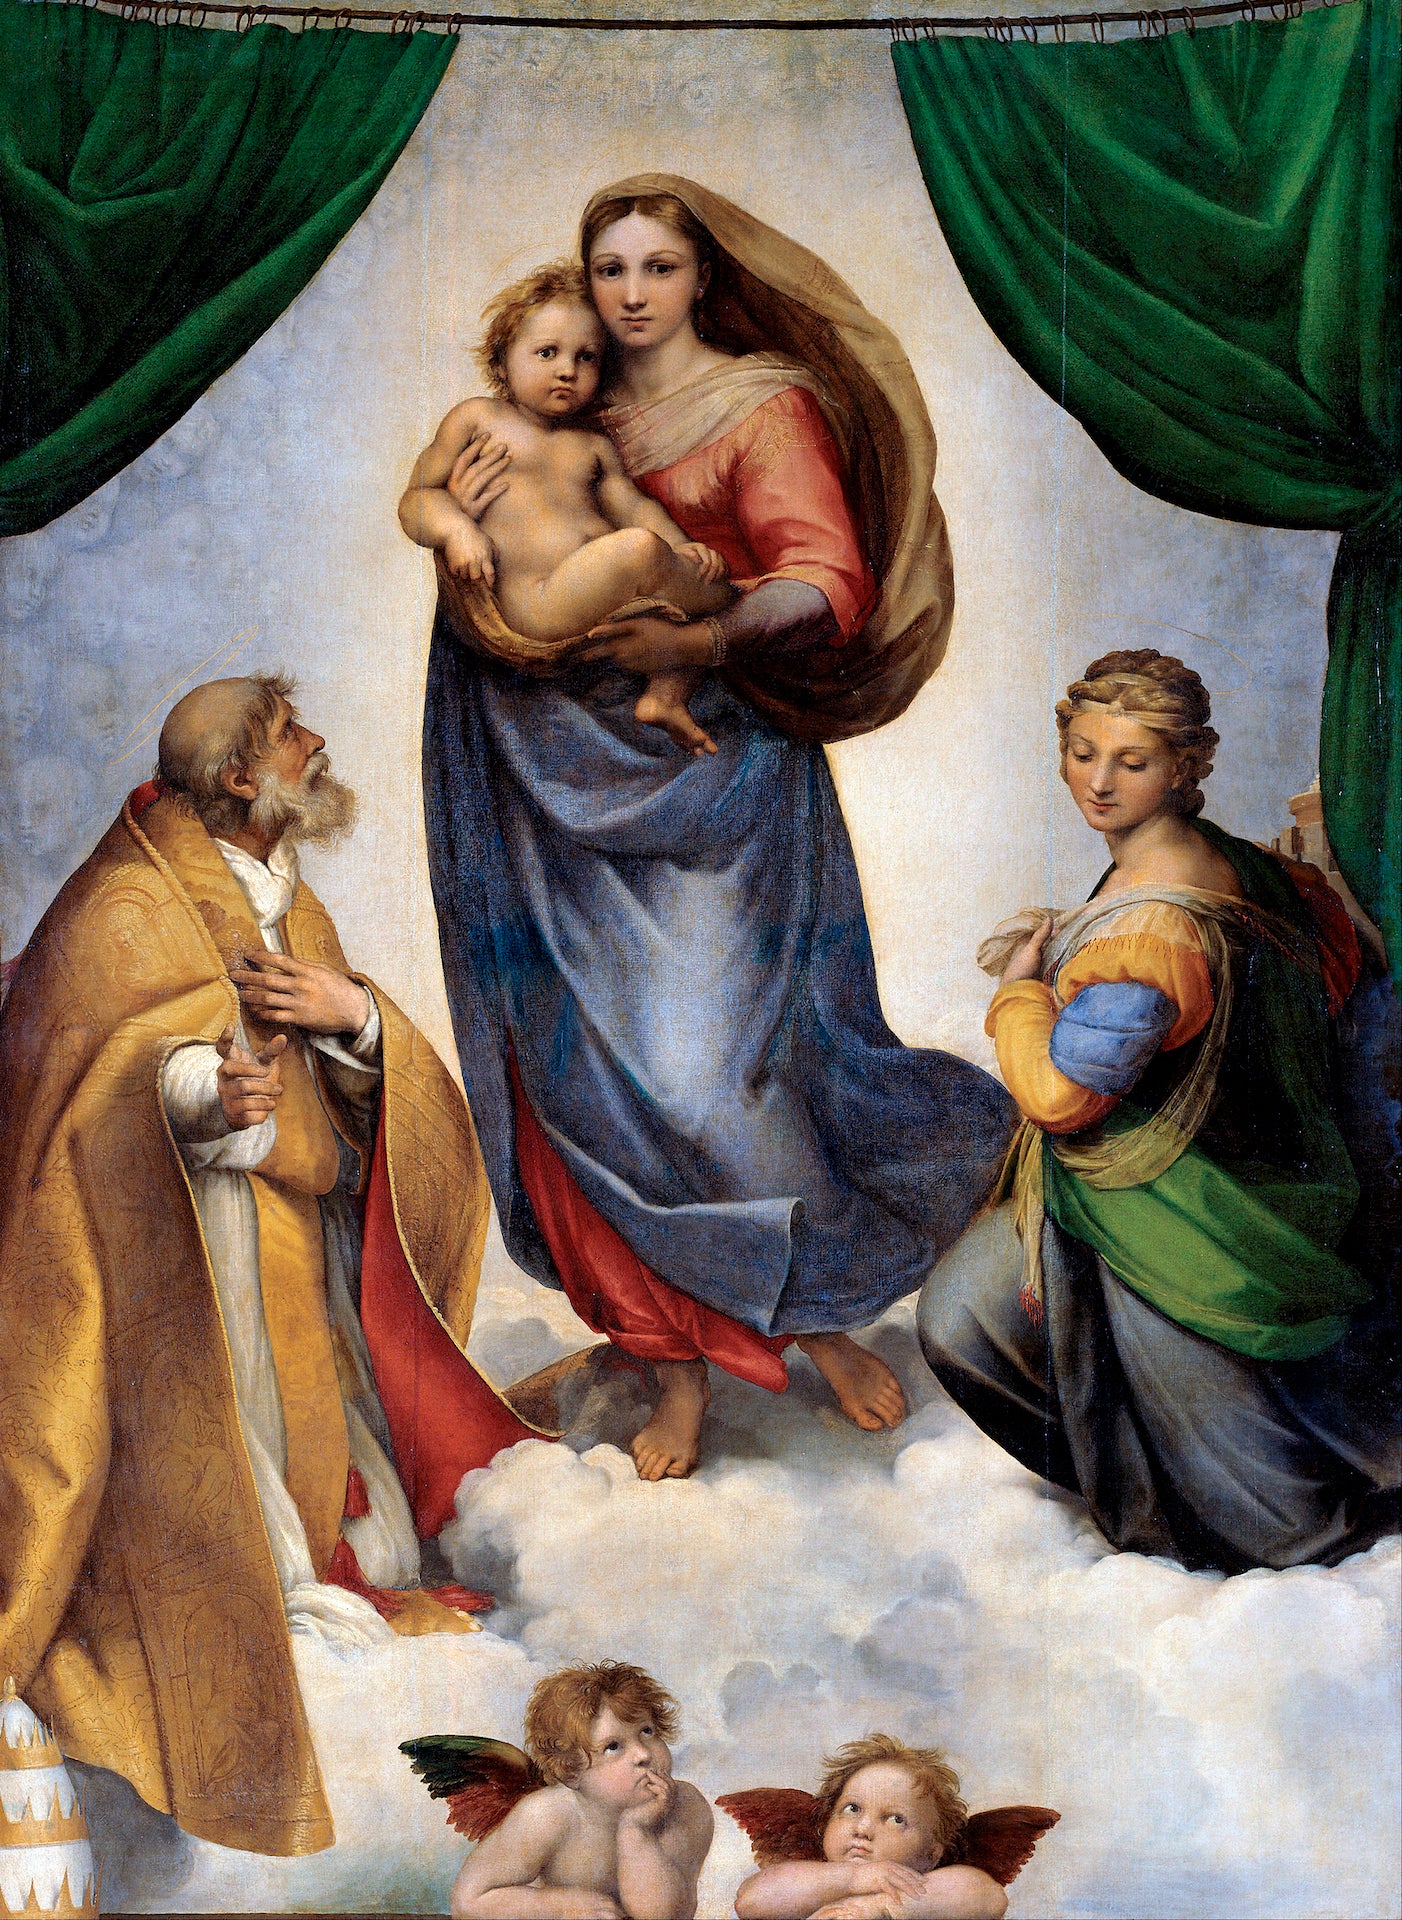 cloud computing The Sistine Madonna, by Raphael. 